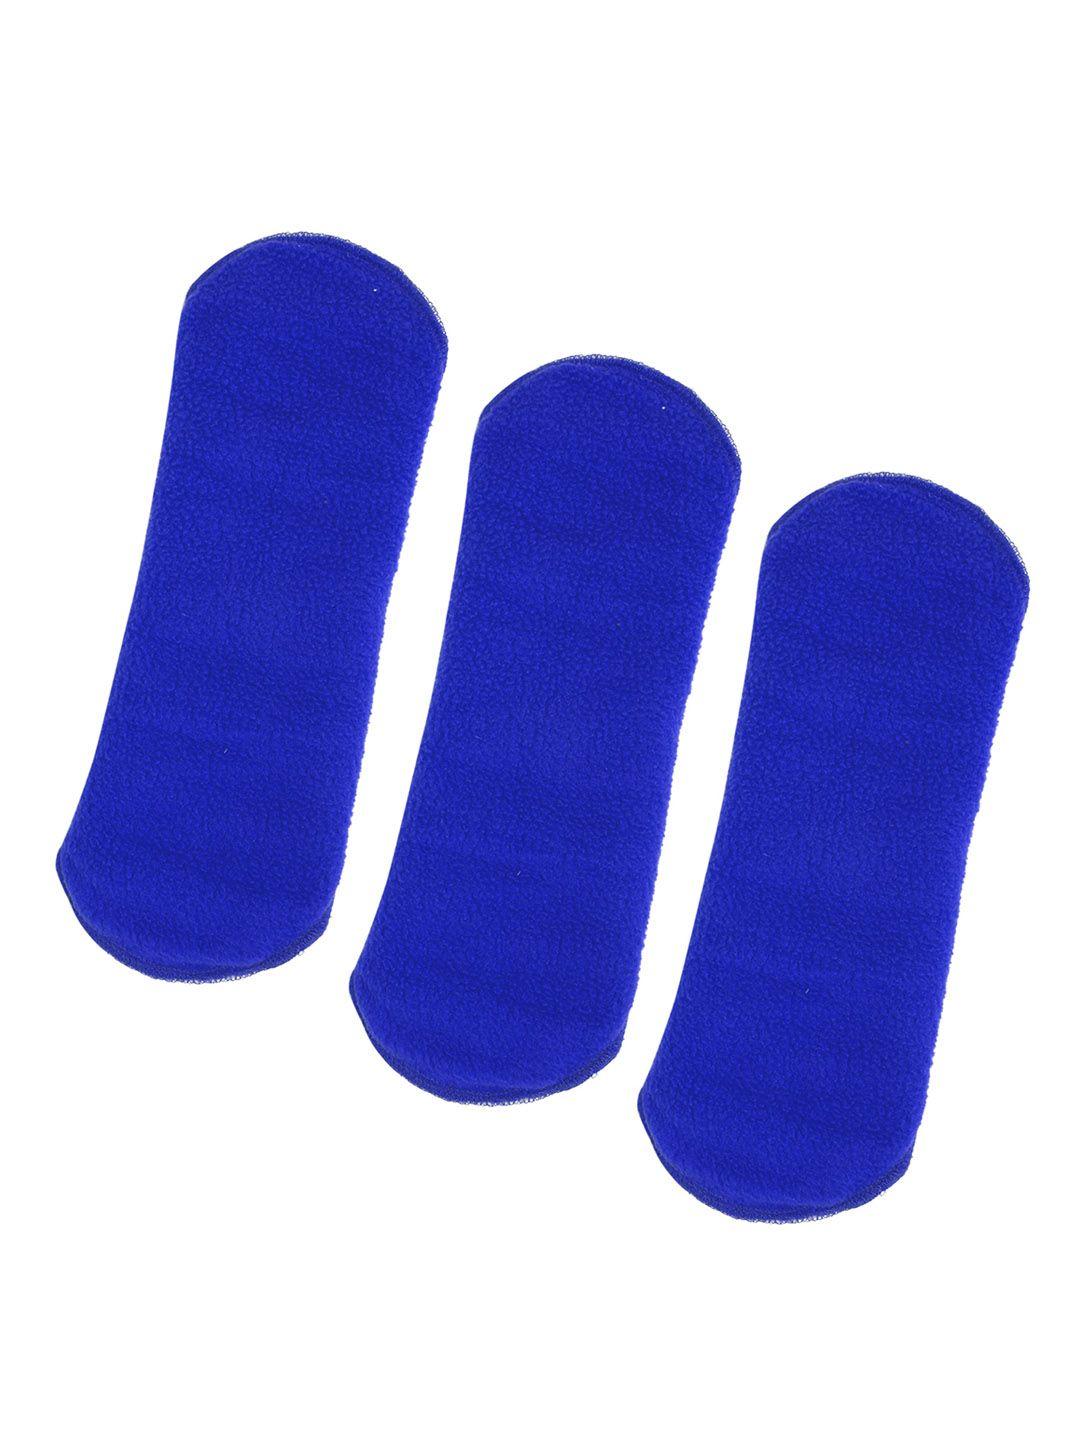 caredone set of 3 ultra thin 4-layered rash free reusable sanitary cloth pads - xl